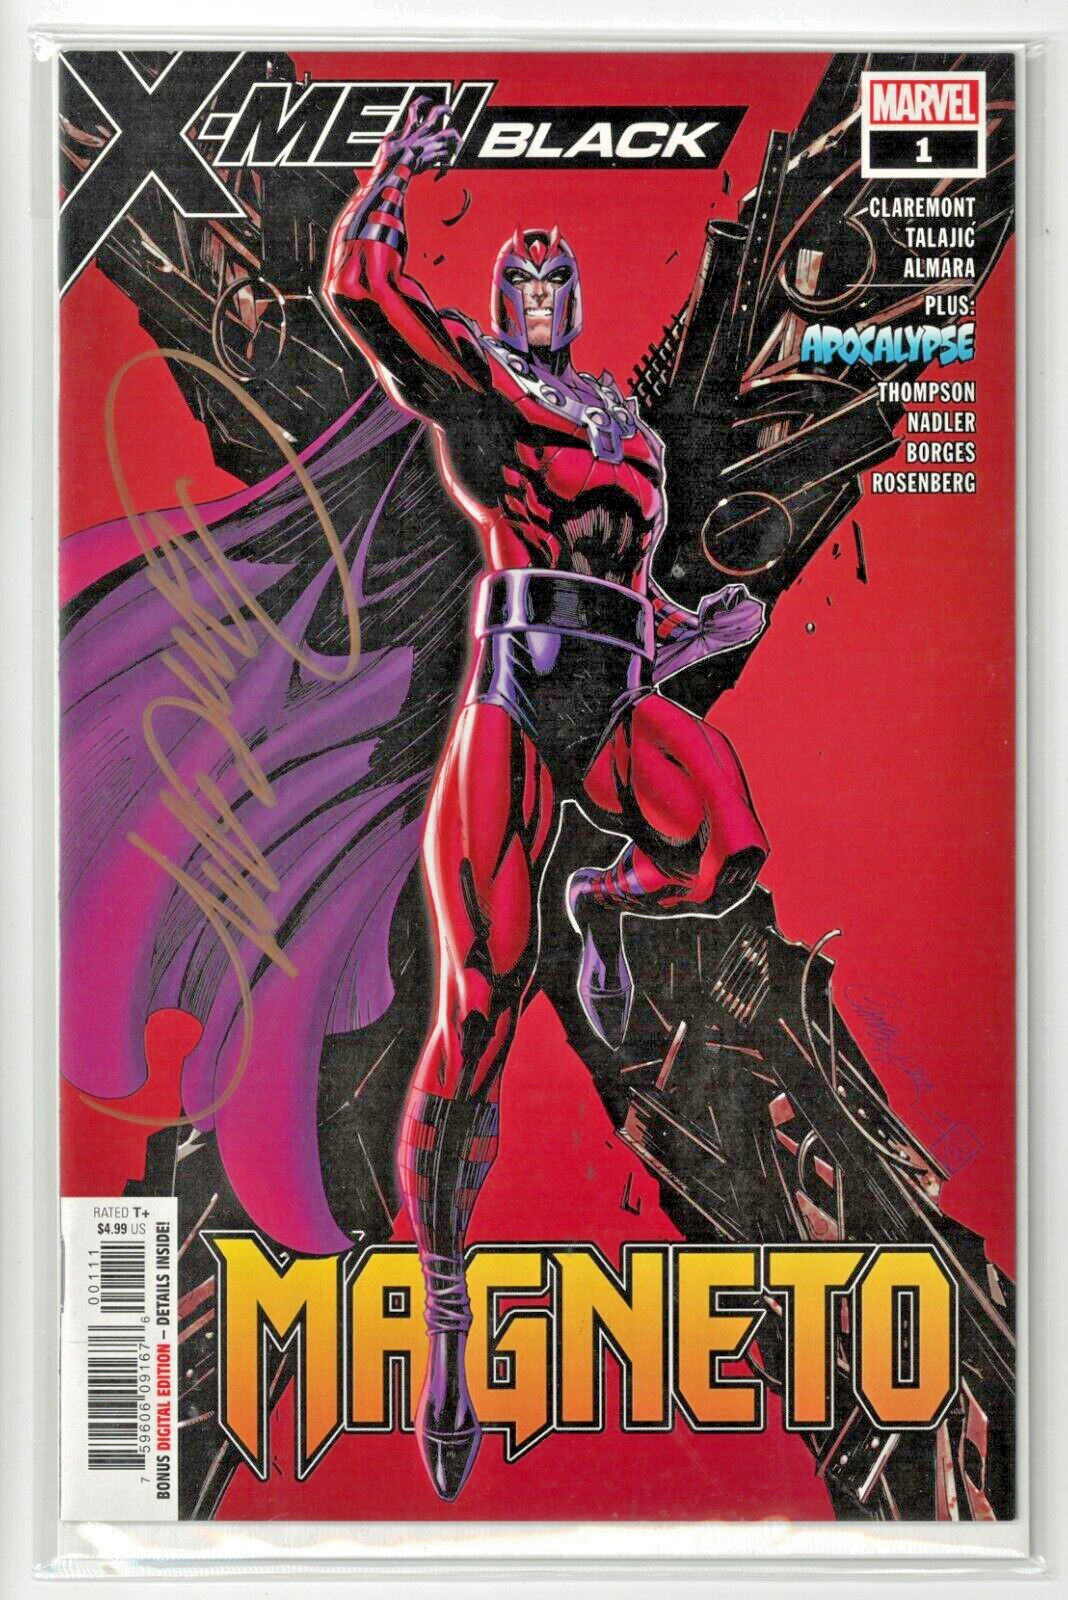 X-Men Black Magneto #1 (Dec 2018, Marvel) Retail Cover, Signed J Scott Campbell